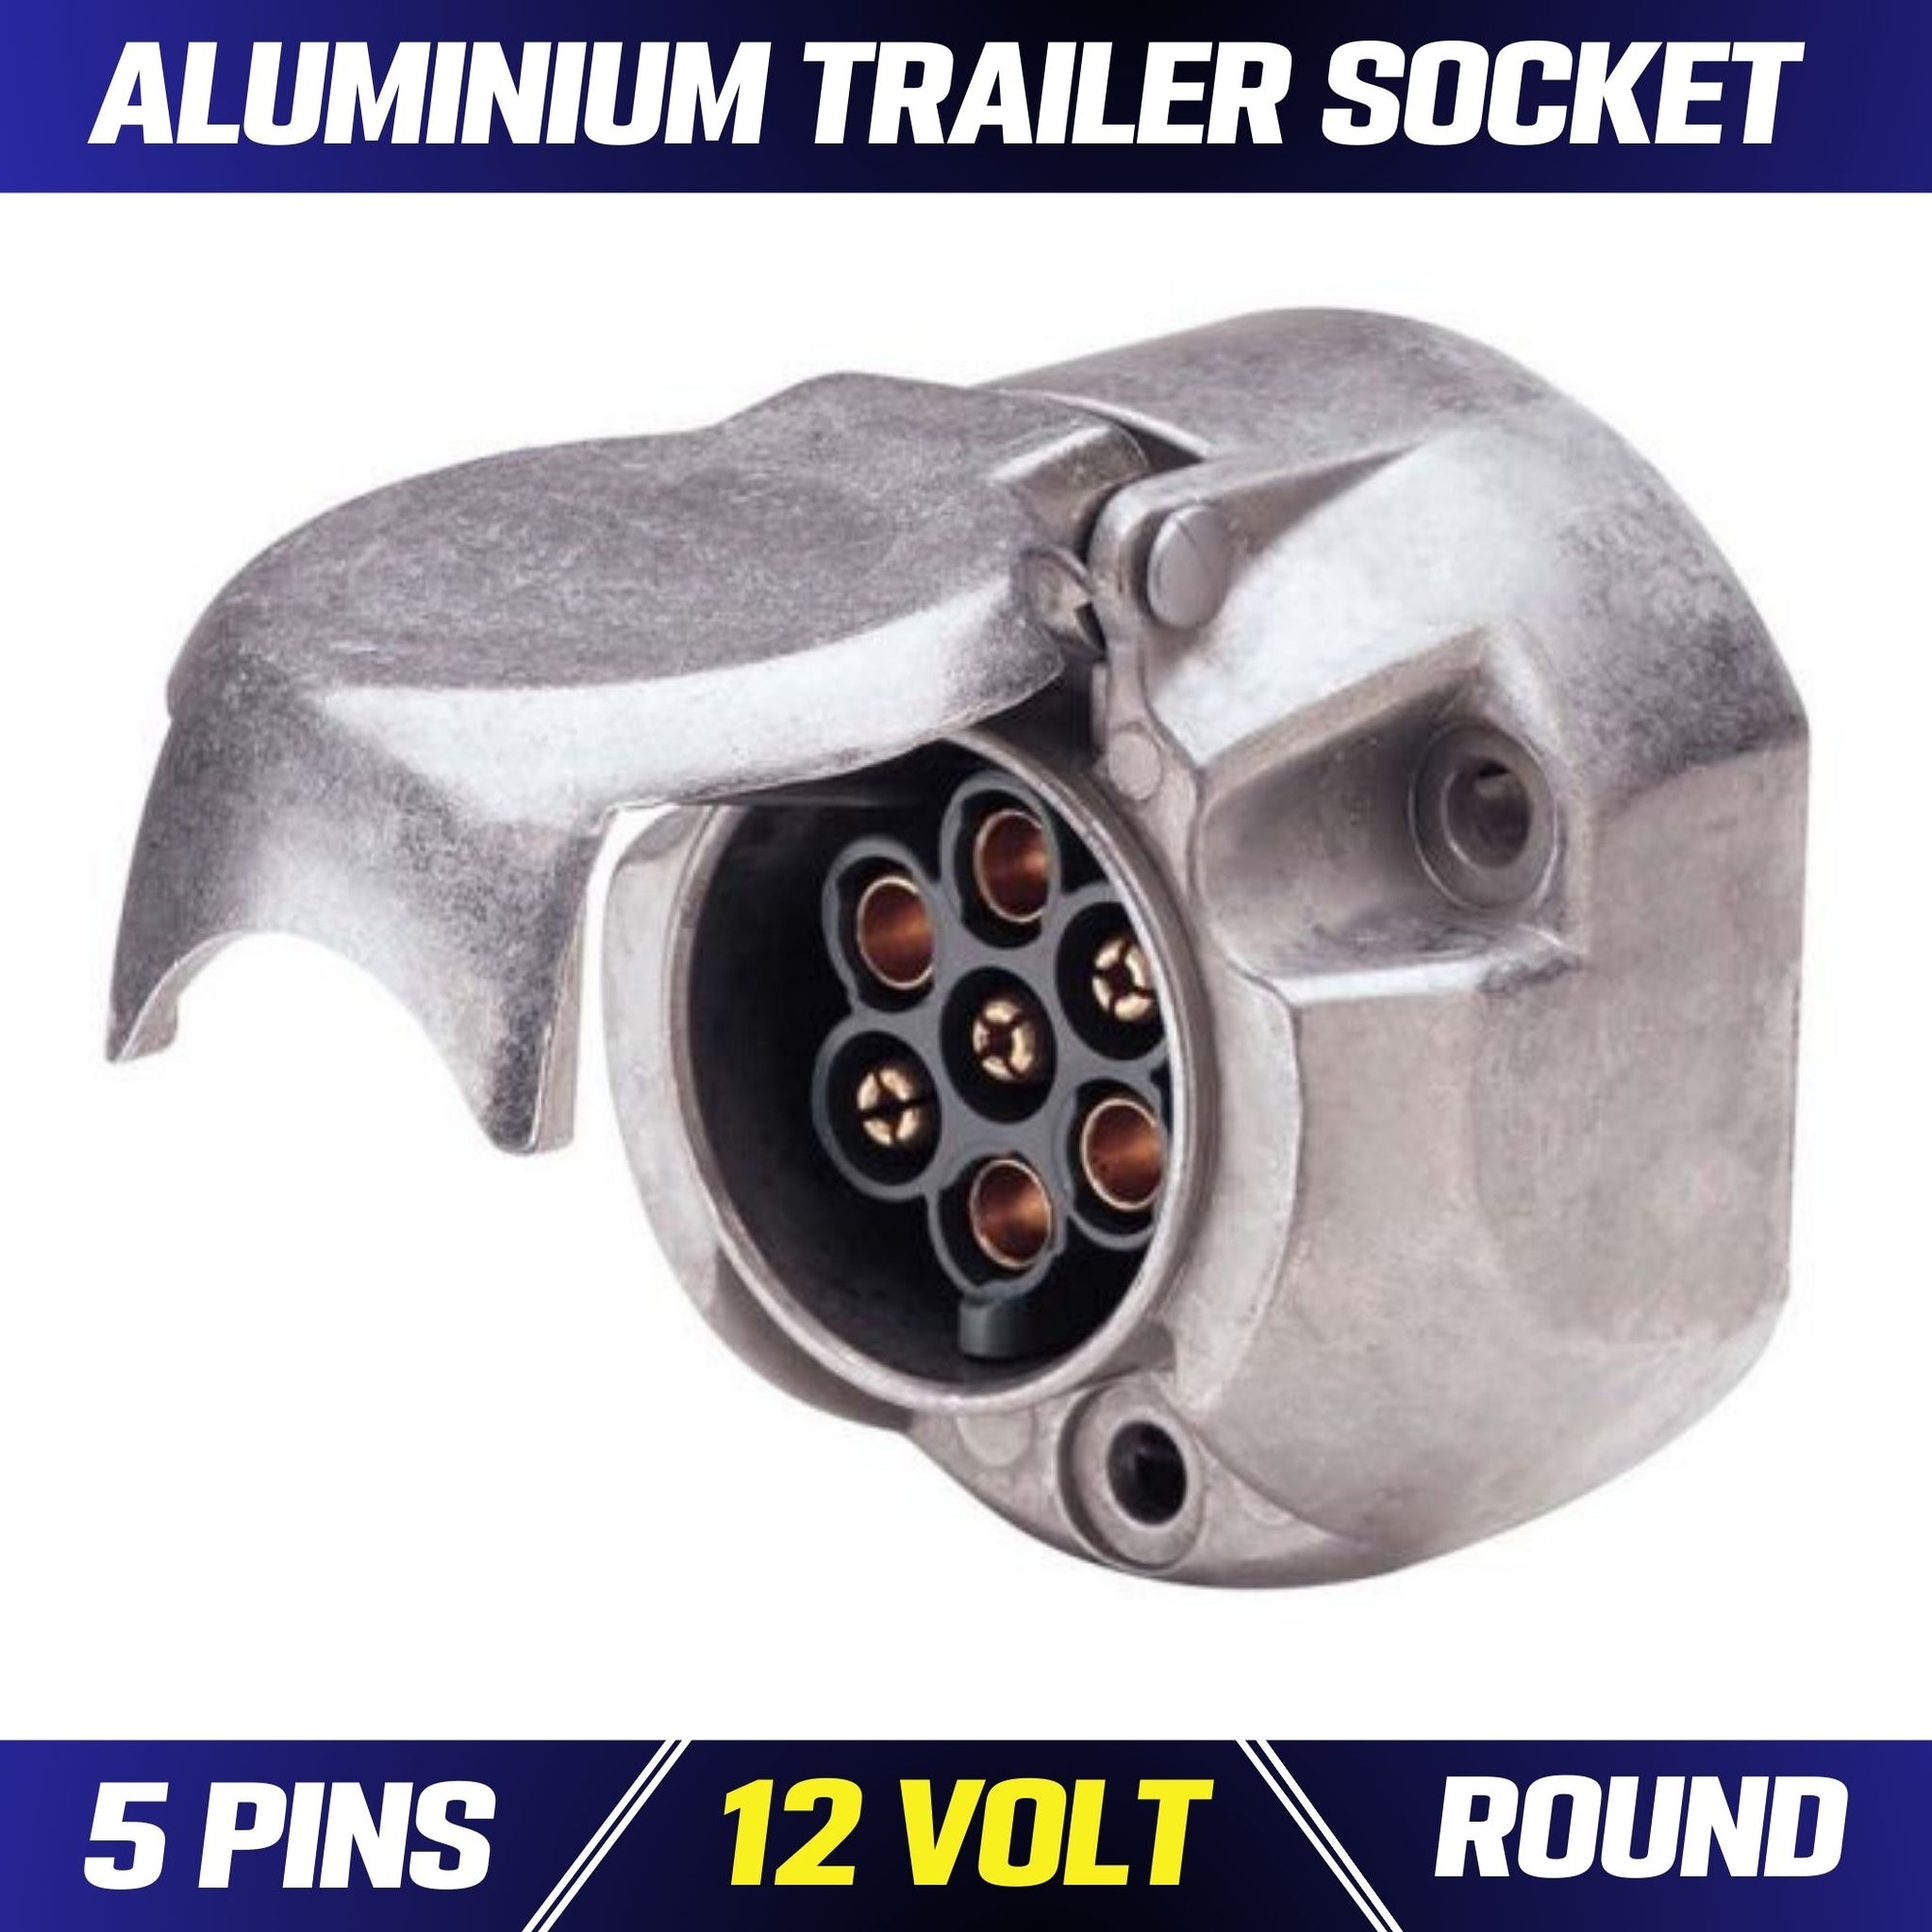 ALUMINIUM 5 Pin Large Round Socket Trailer Plug | 12 Volt | TS004315 - South East Clearance Centre